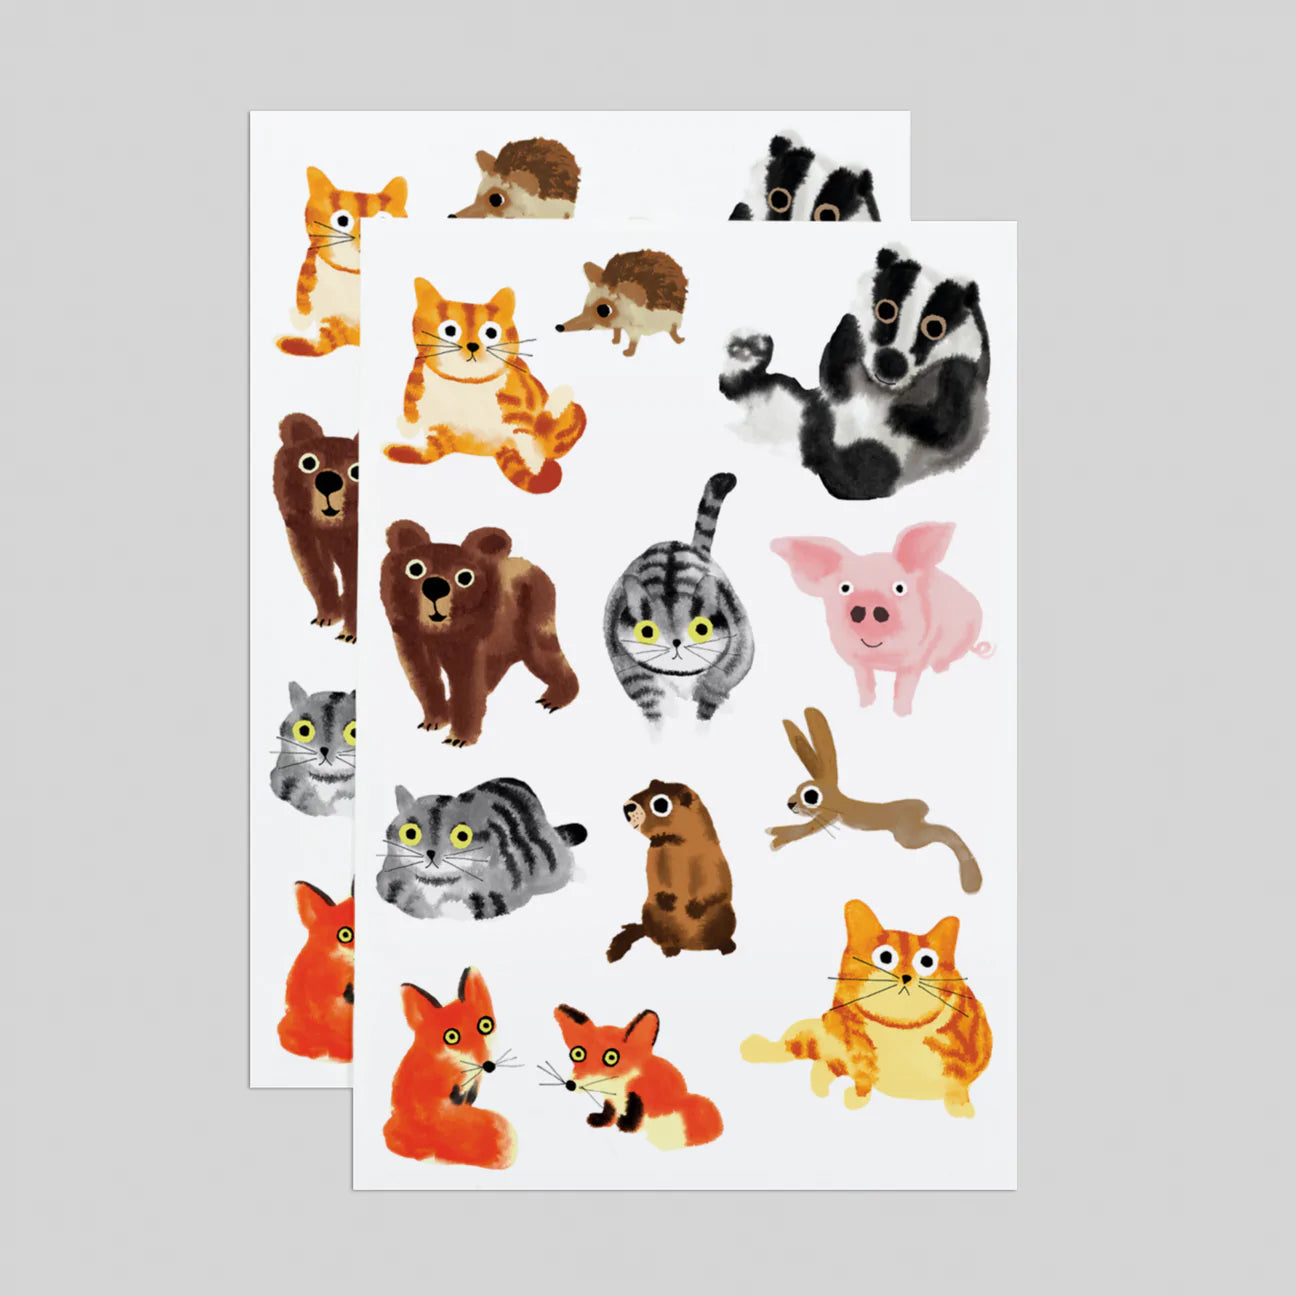 Furry Friends Tattoo Sheet